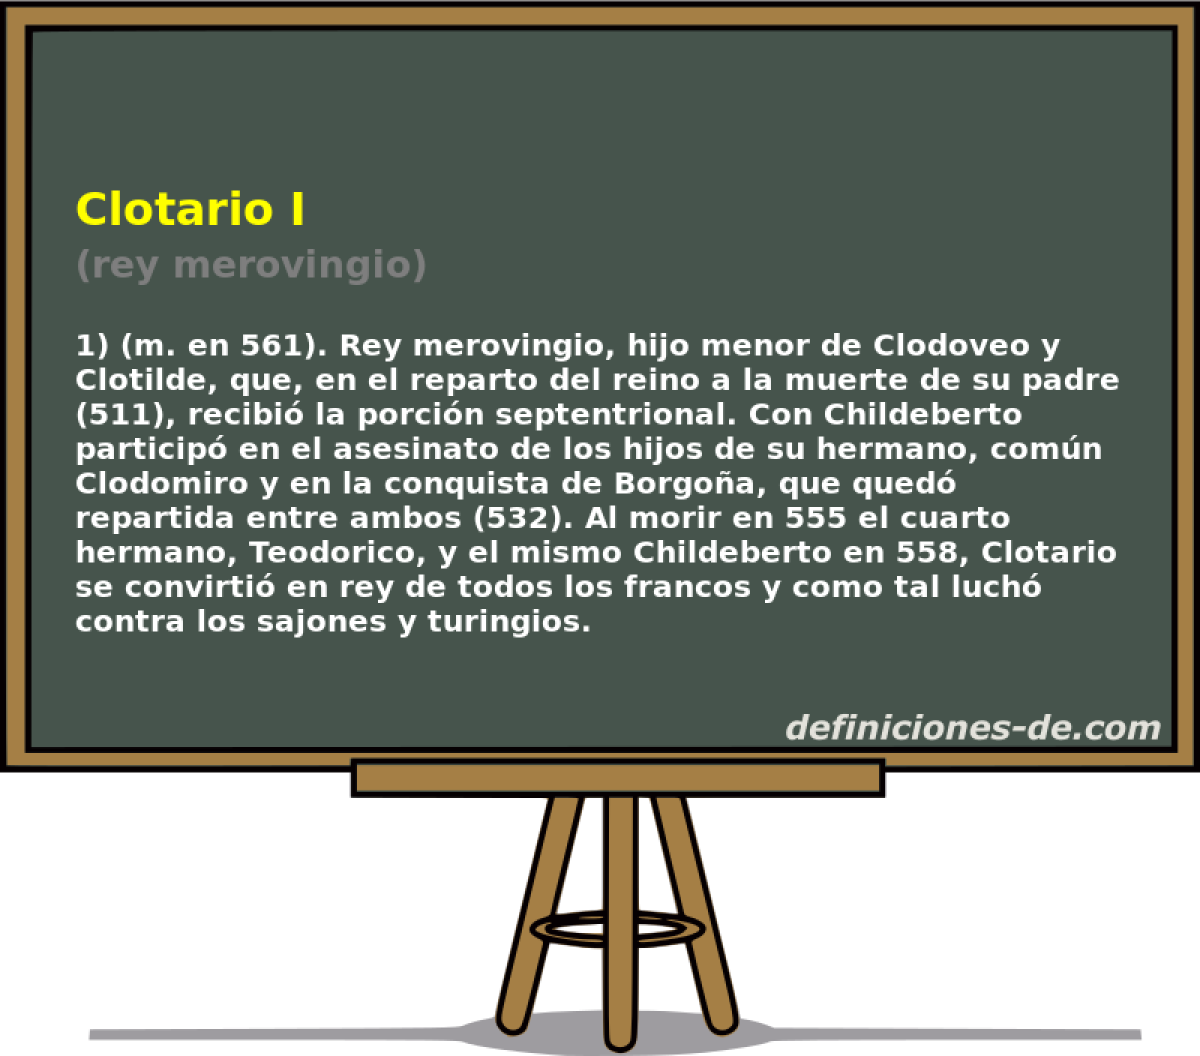 Clotario I (rey merovingio)